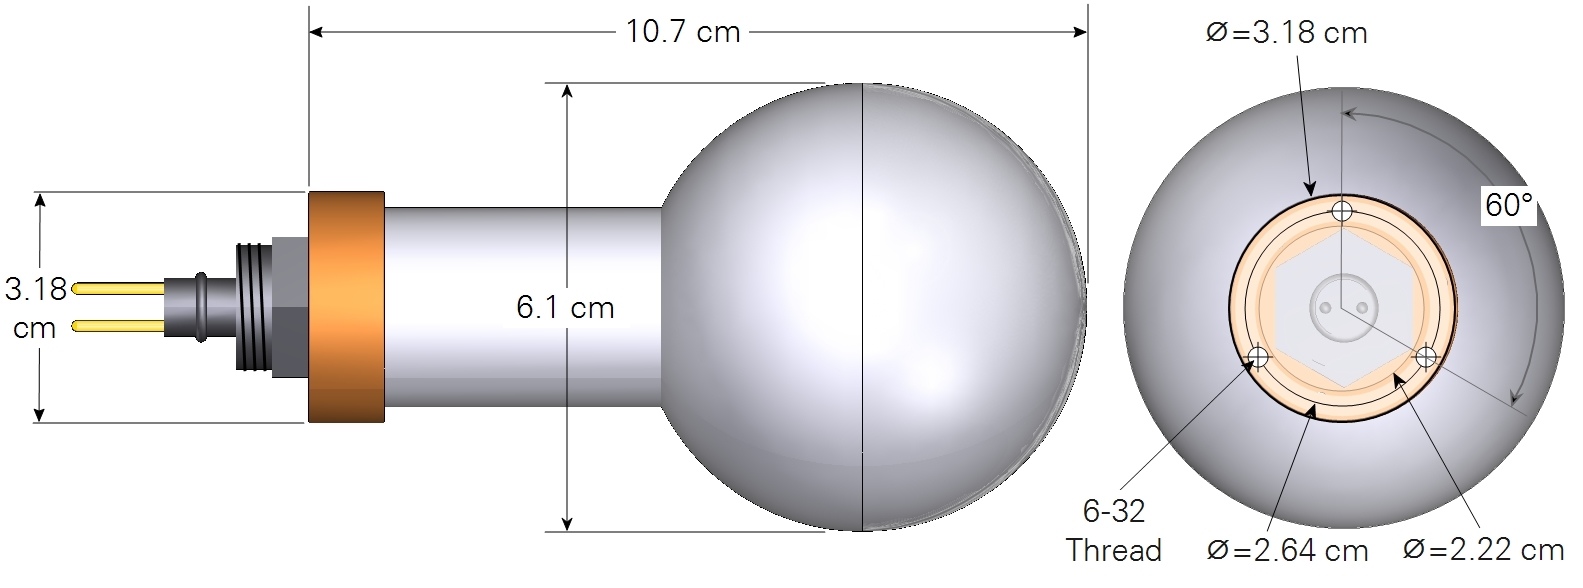 Dimensions of the LI-193 Spherical Underwater Quantum Sensor.